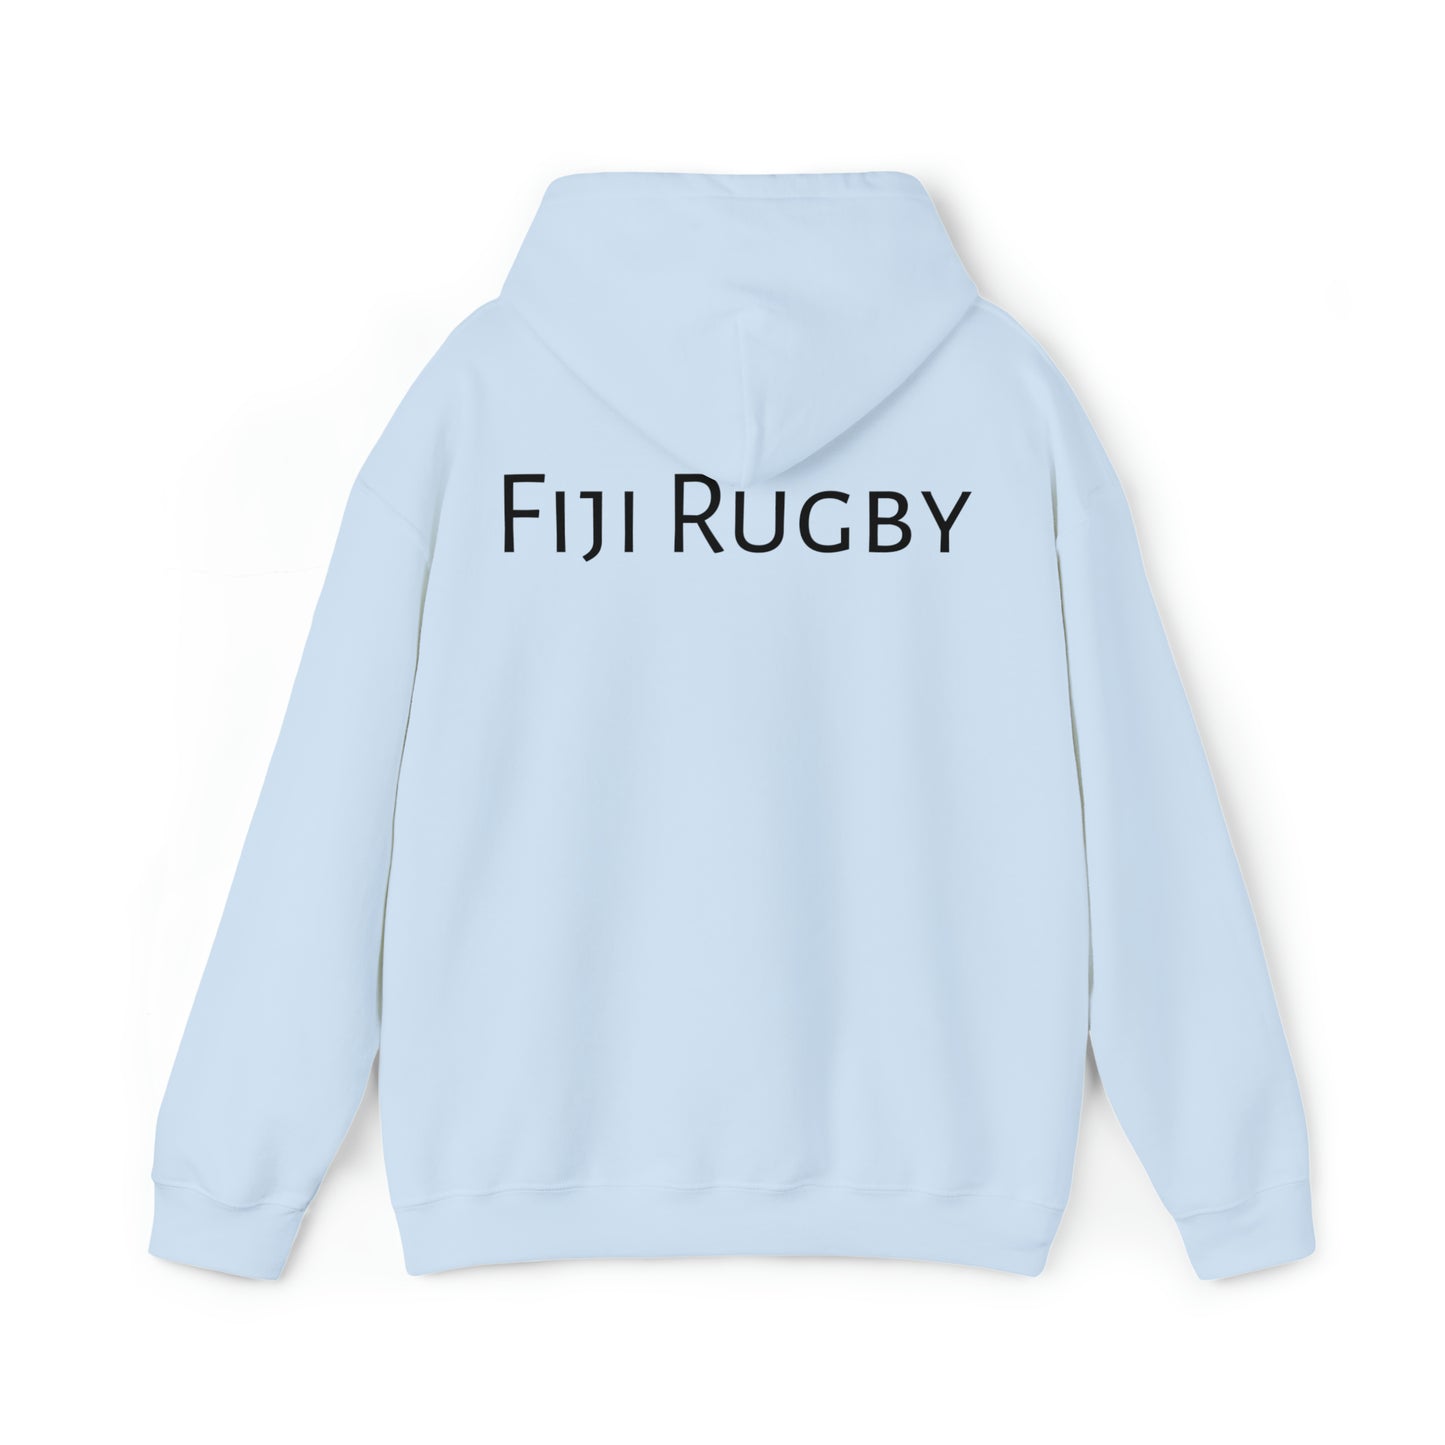 Celebrating Fiji - light hoodies